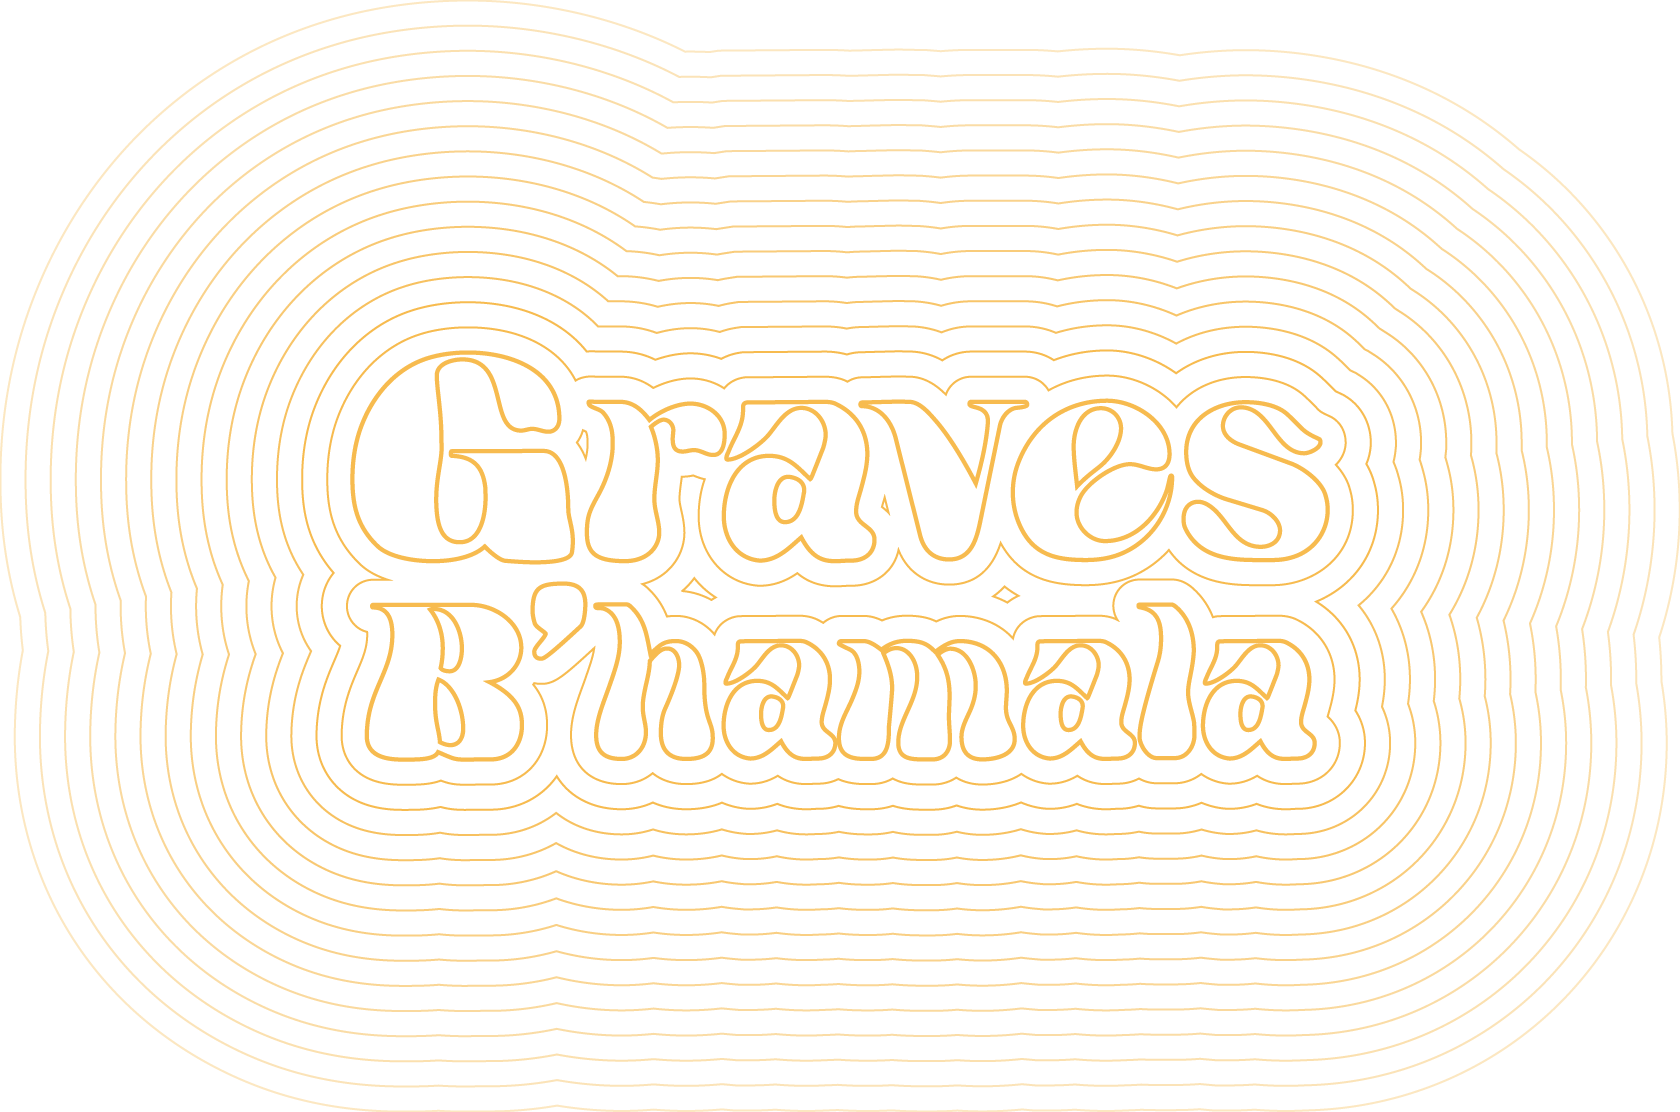 Graves B'hamala